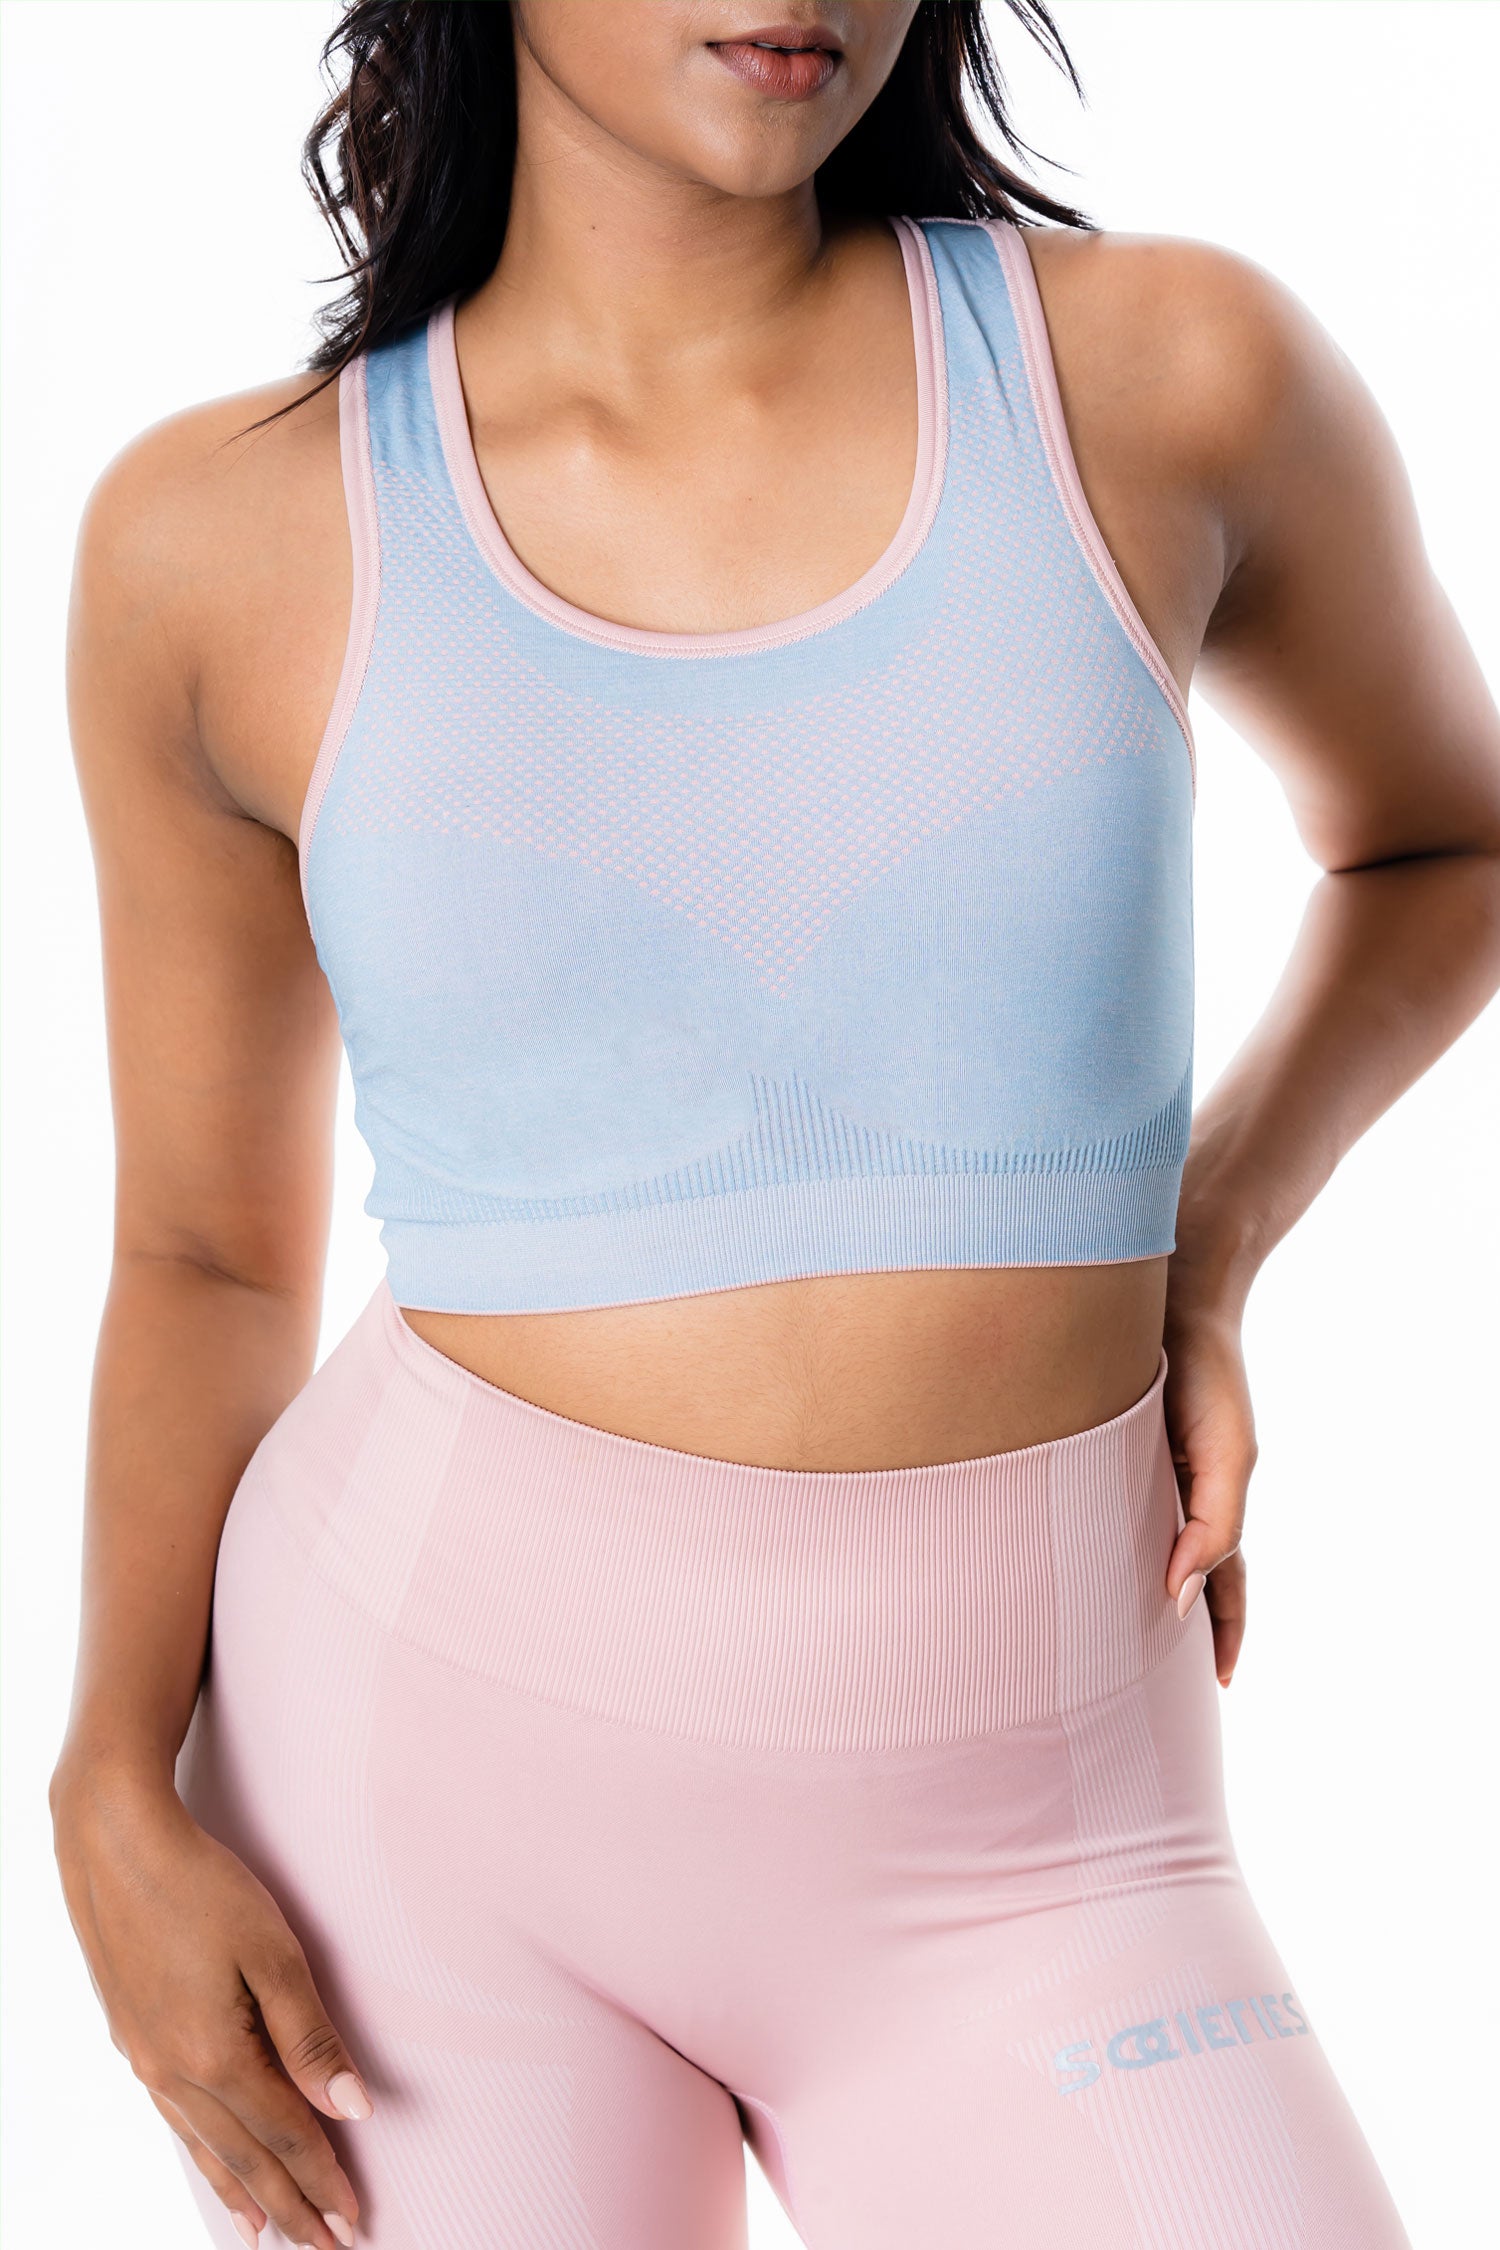 Seamless Rose Pink Sports Bra | Societies Clothing Sri Lanka | Activewear | Gym Clothes | Gym Wear